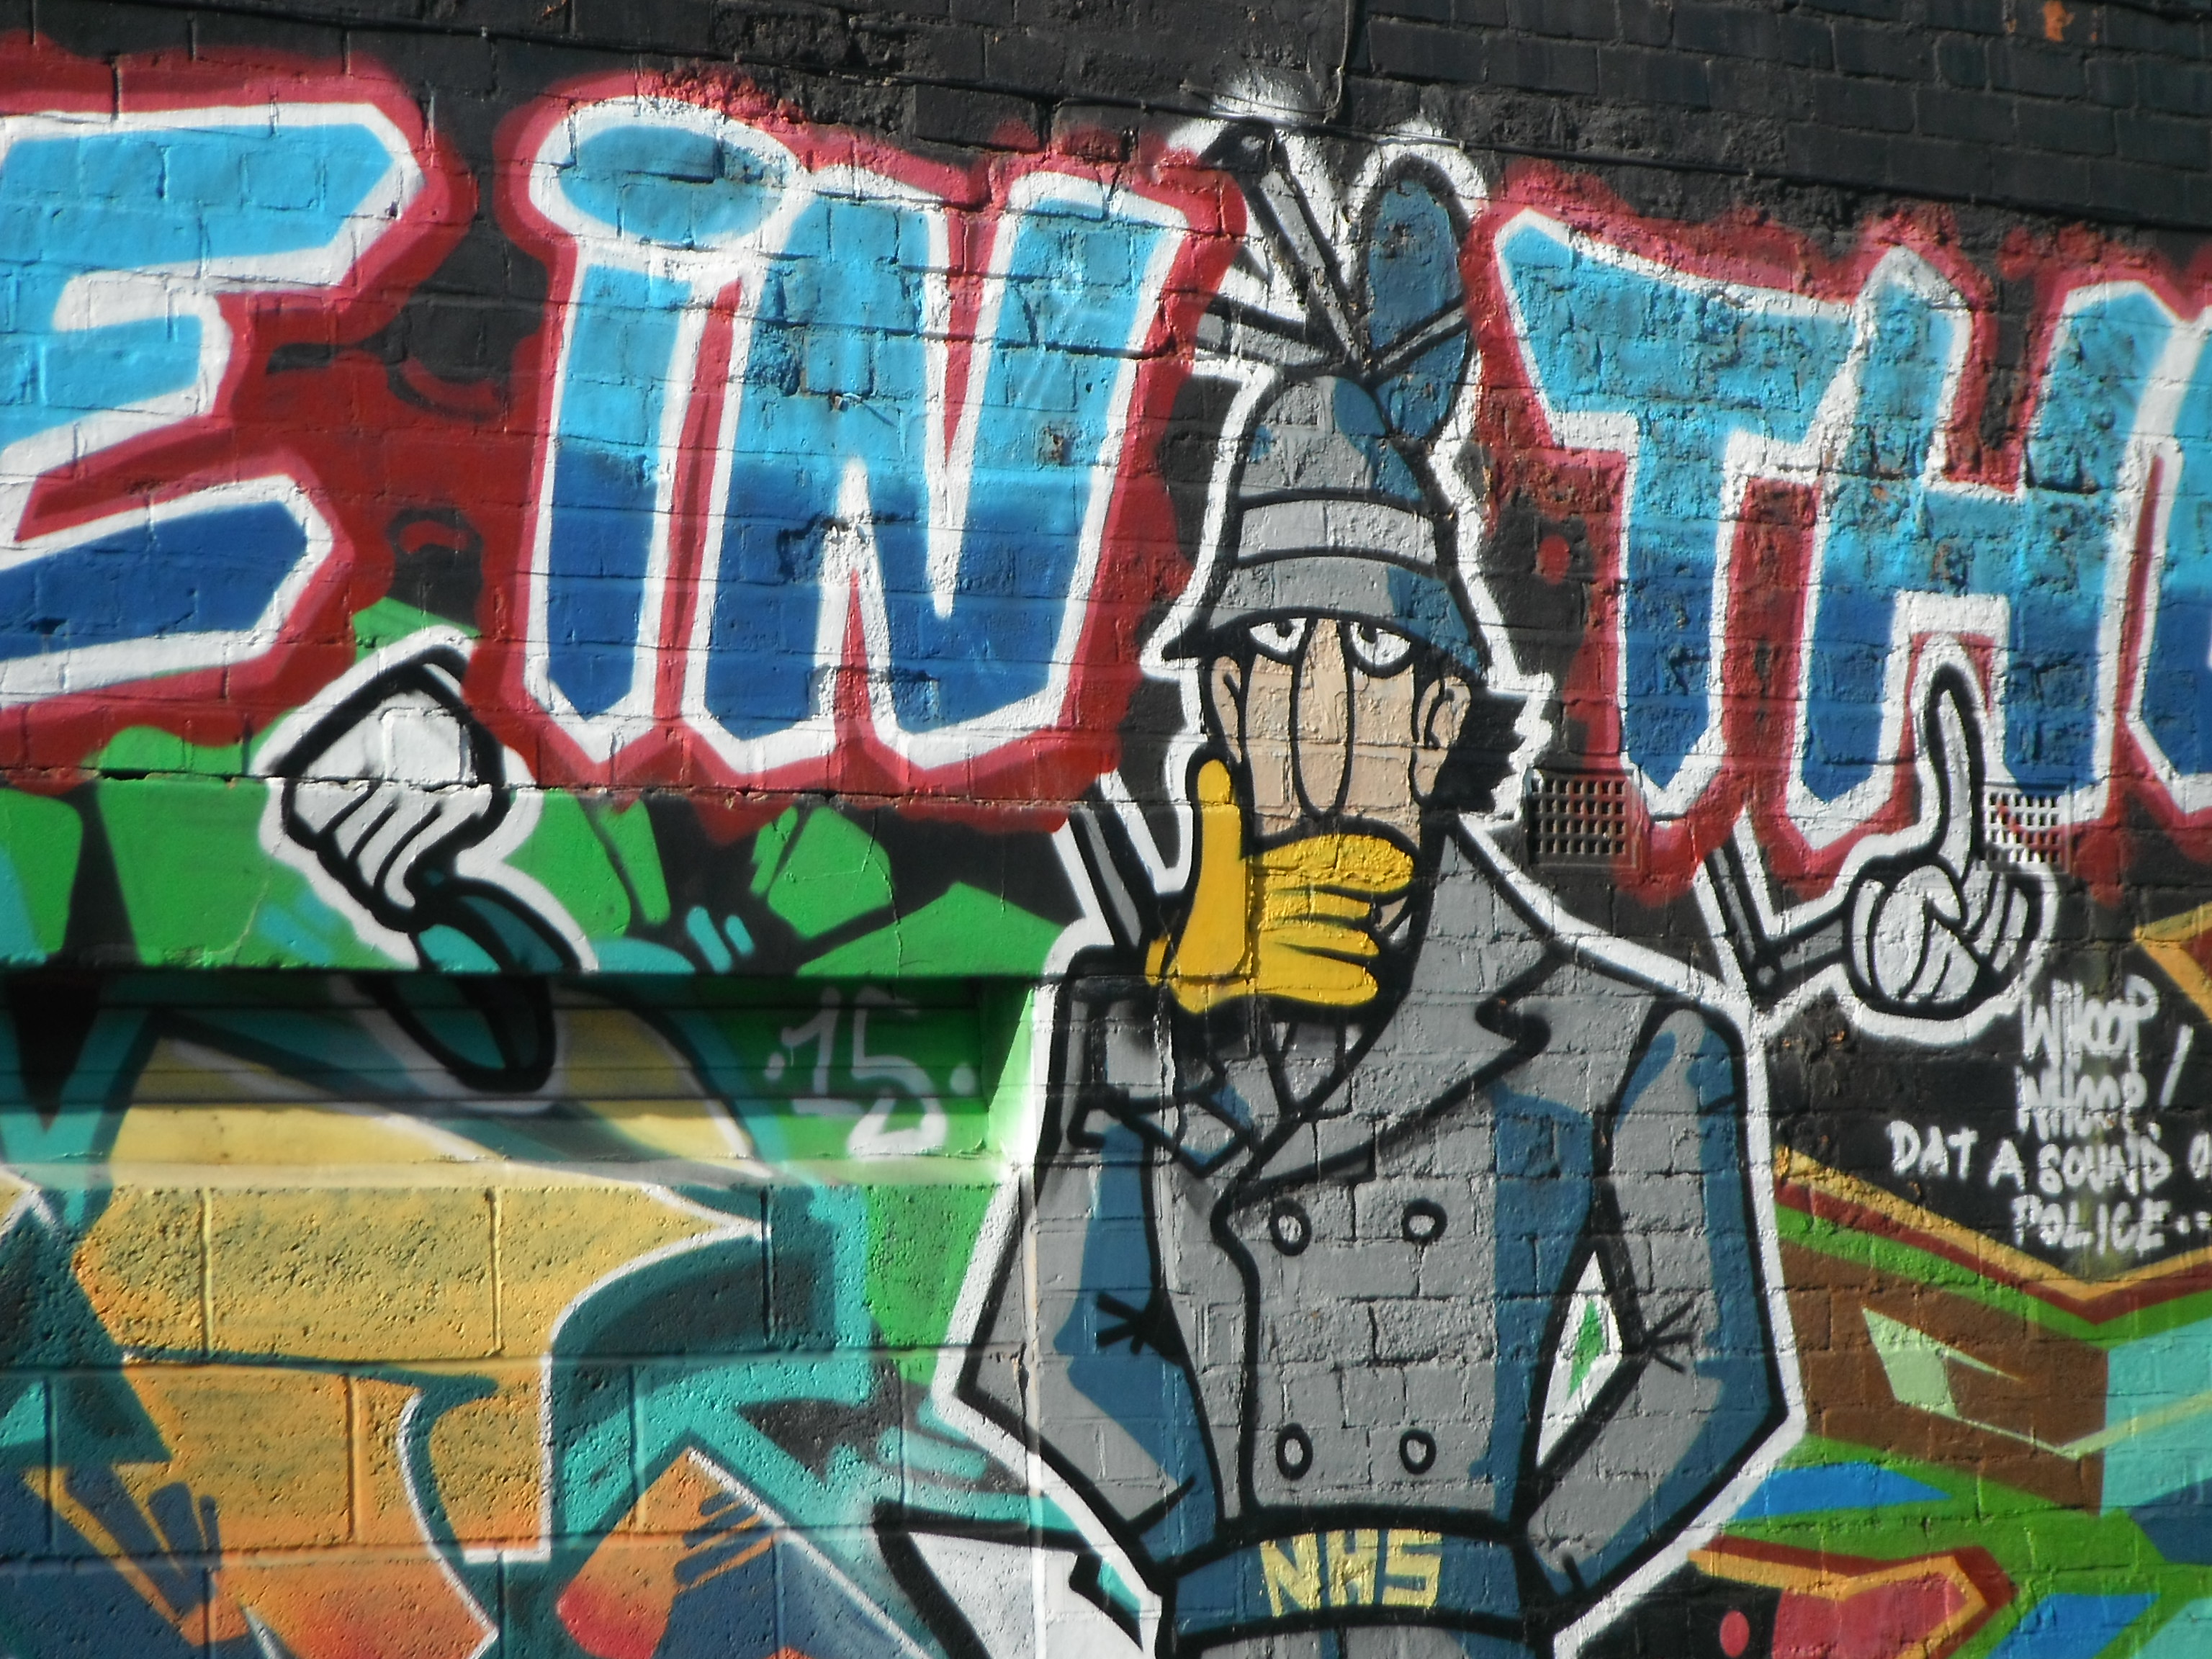 Photo taken by me – The Inspector Gadget Mural, Digbeth, Birmingham.